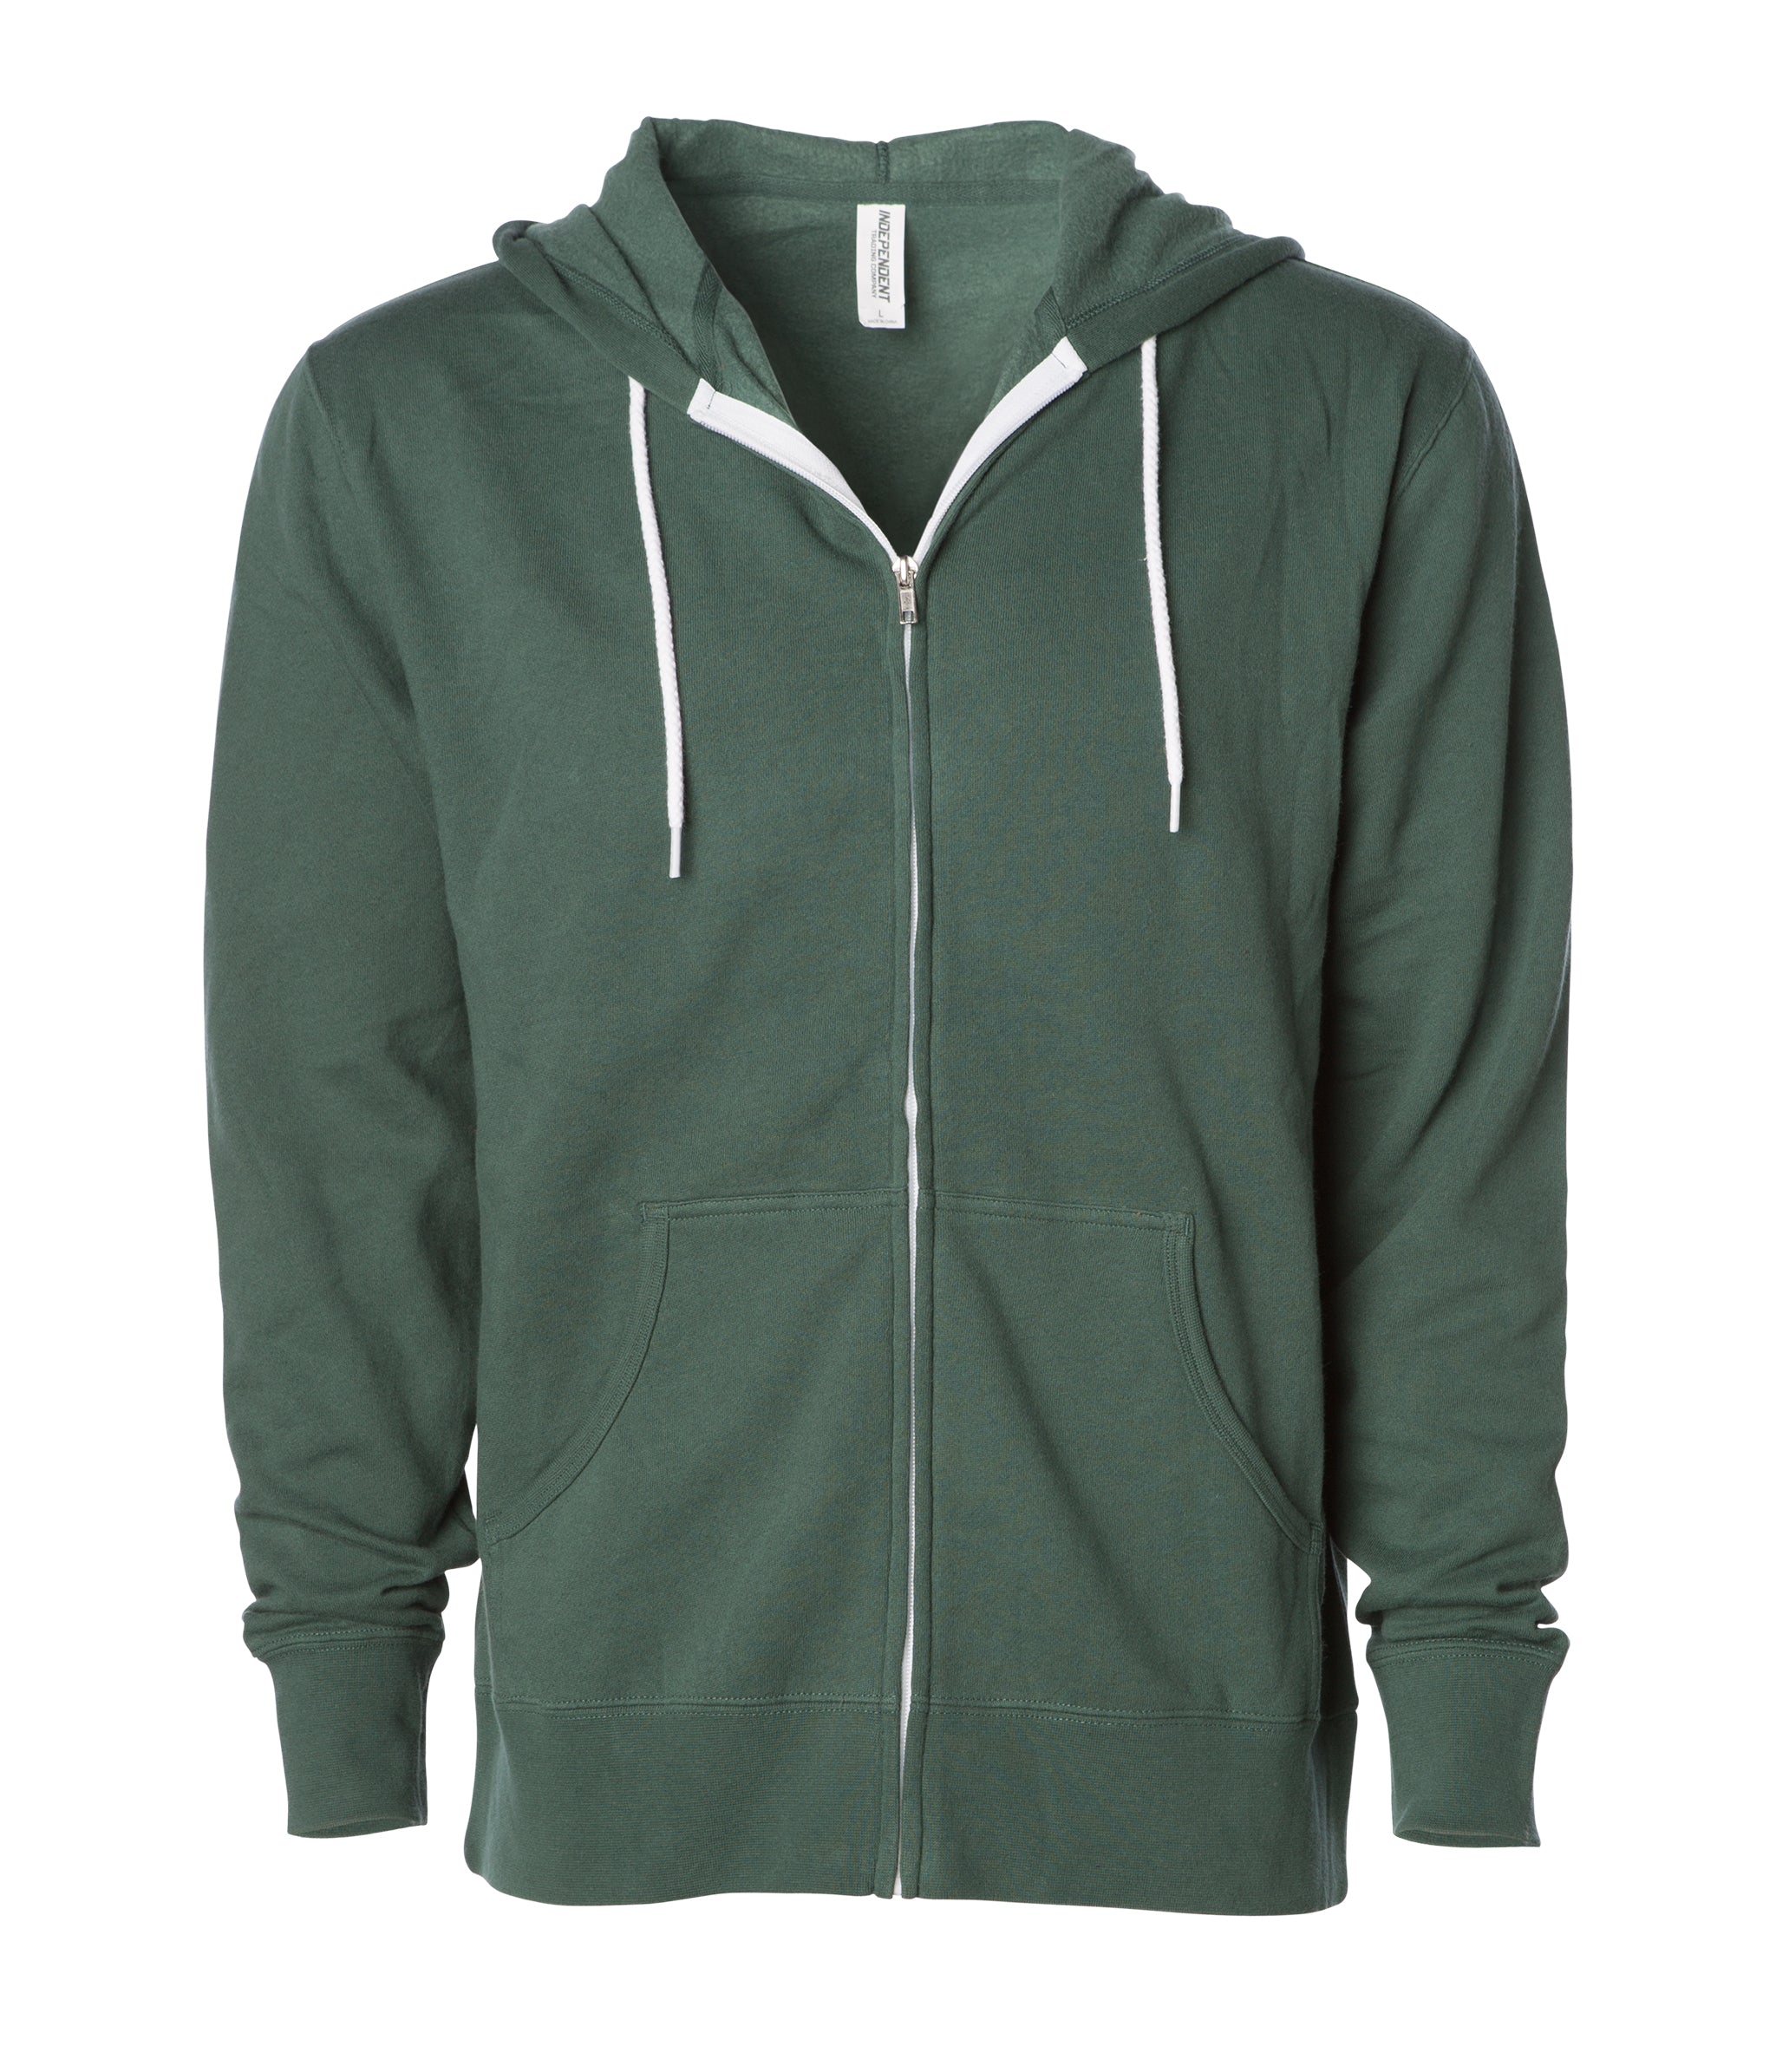 Unisex Contrasting Zip Hooded Sweatshirt | Independent Trading Company